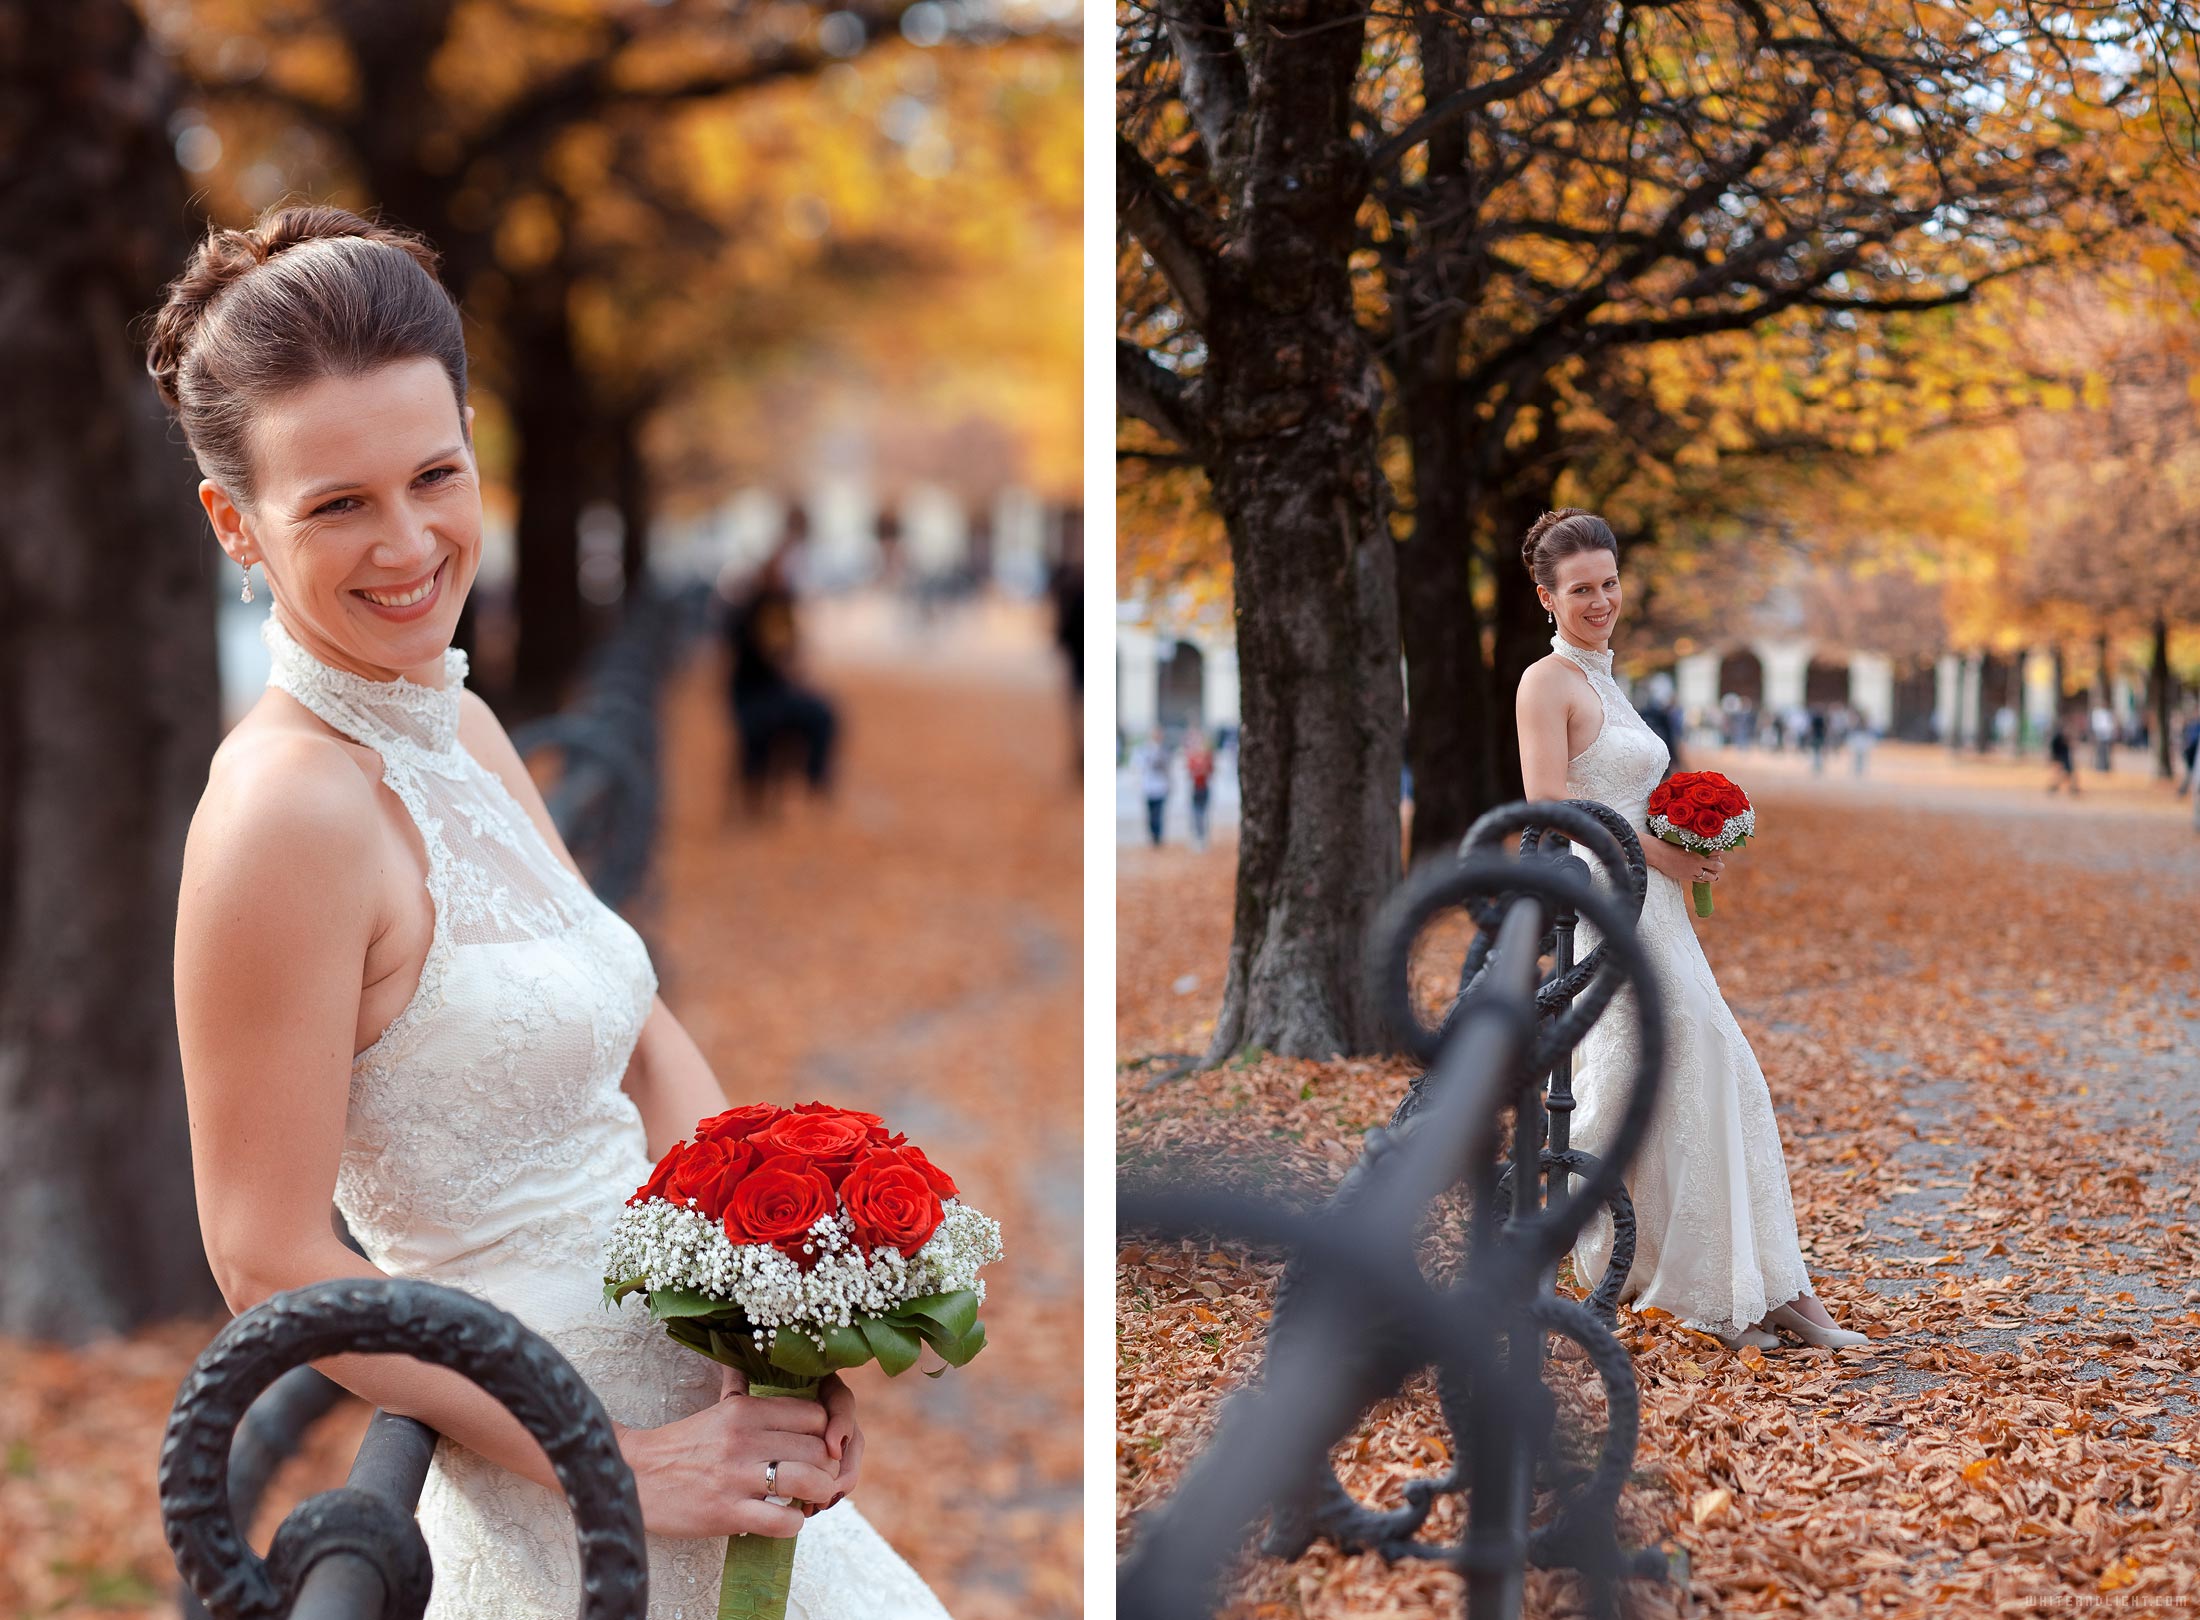 Wedding photographer Hofgarten - wedding photographer packages